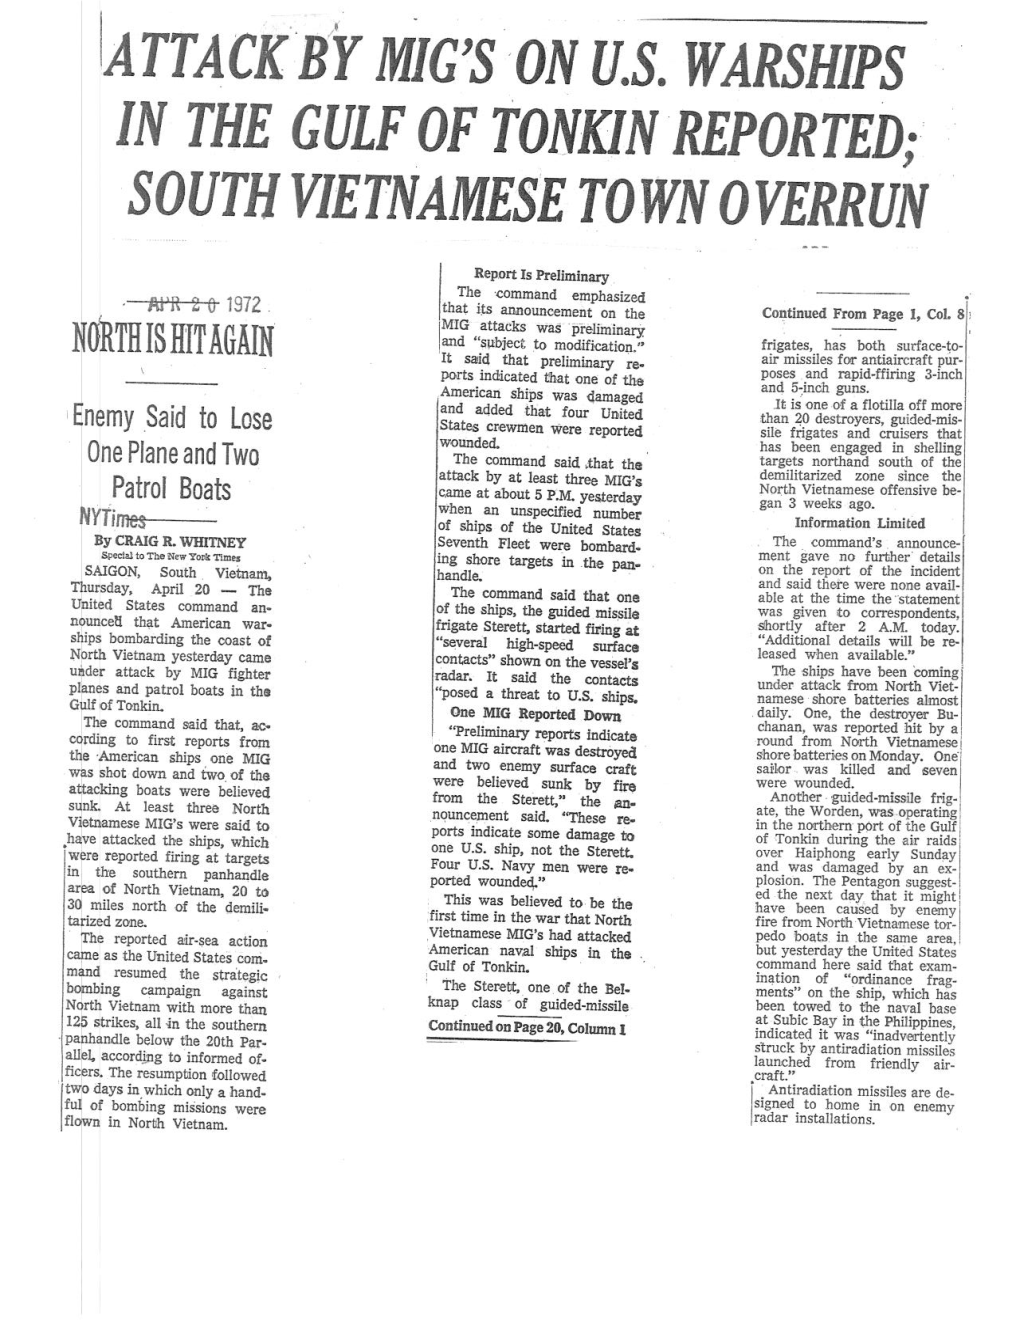 South Vietnamese Town Overrun